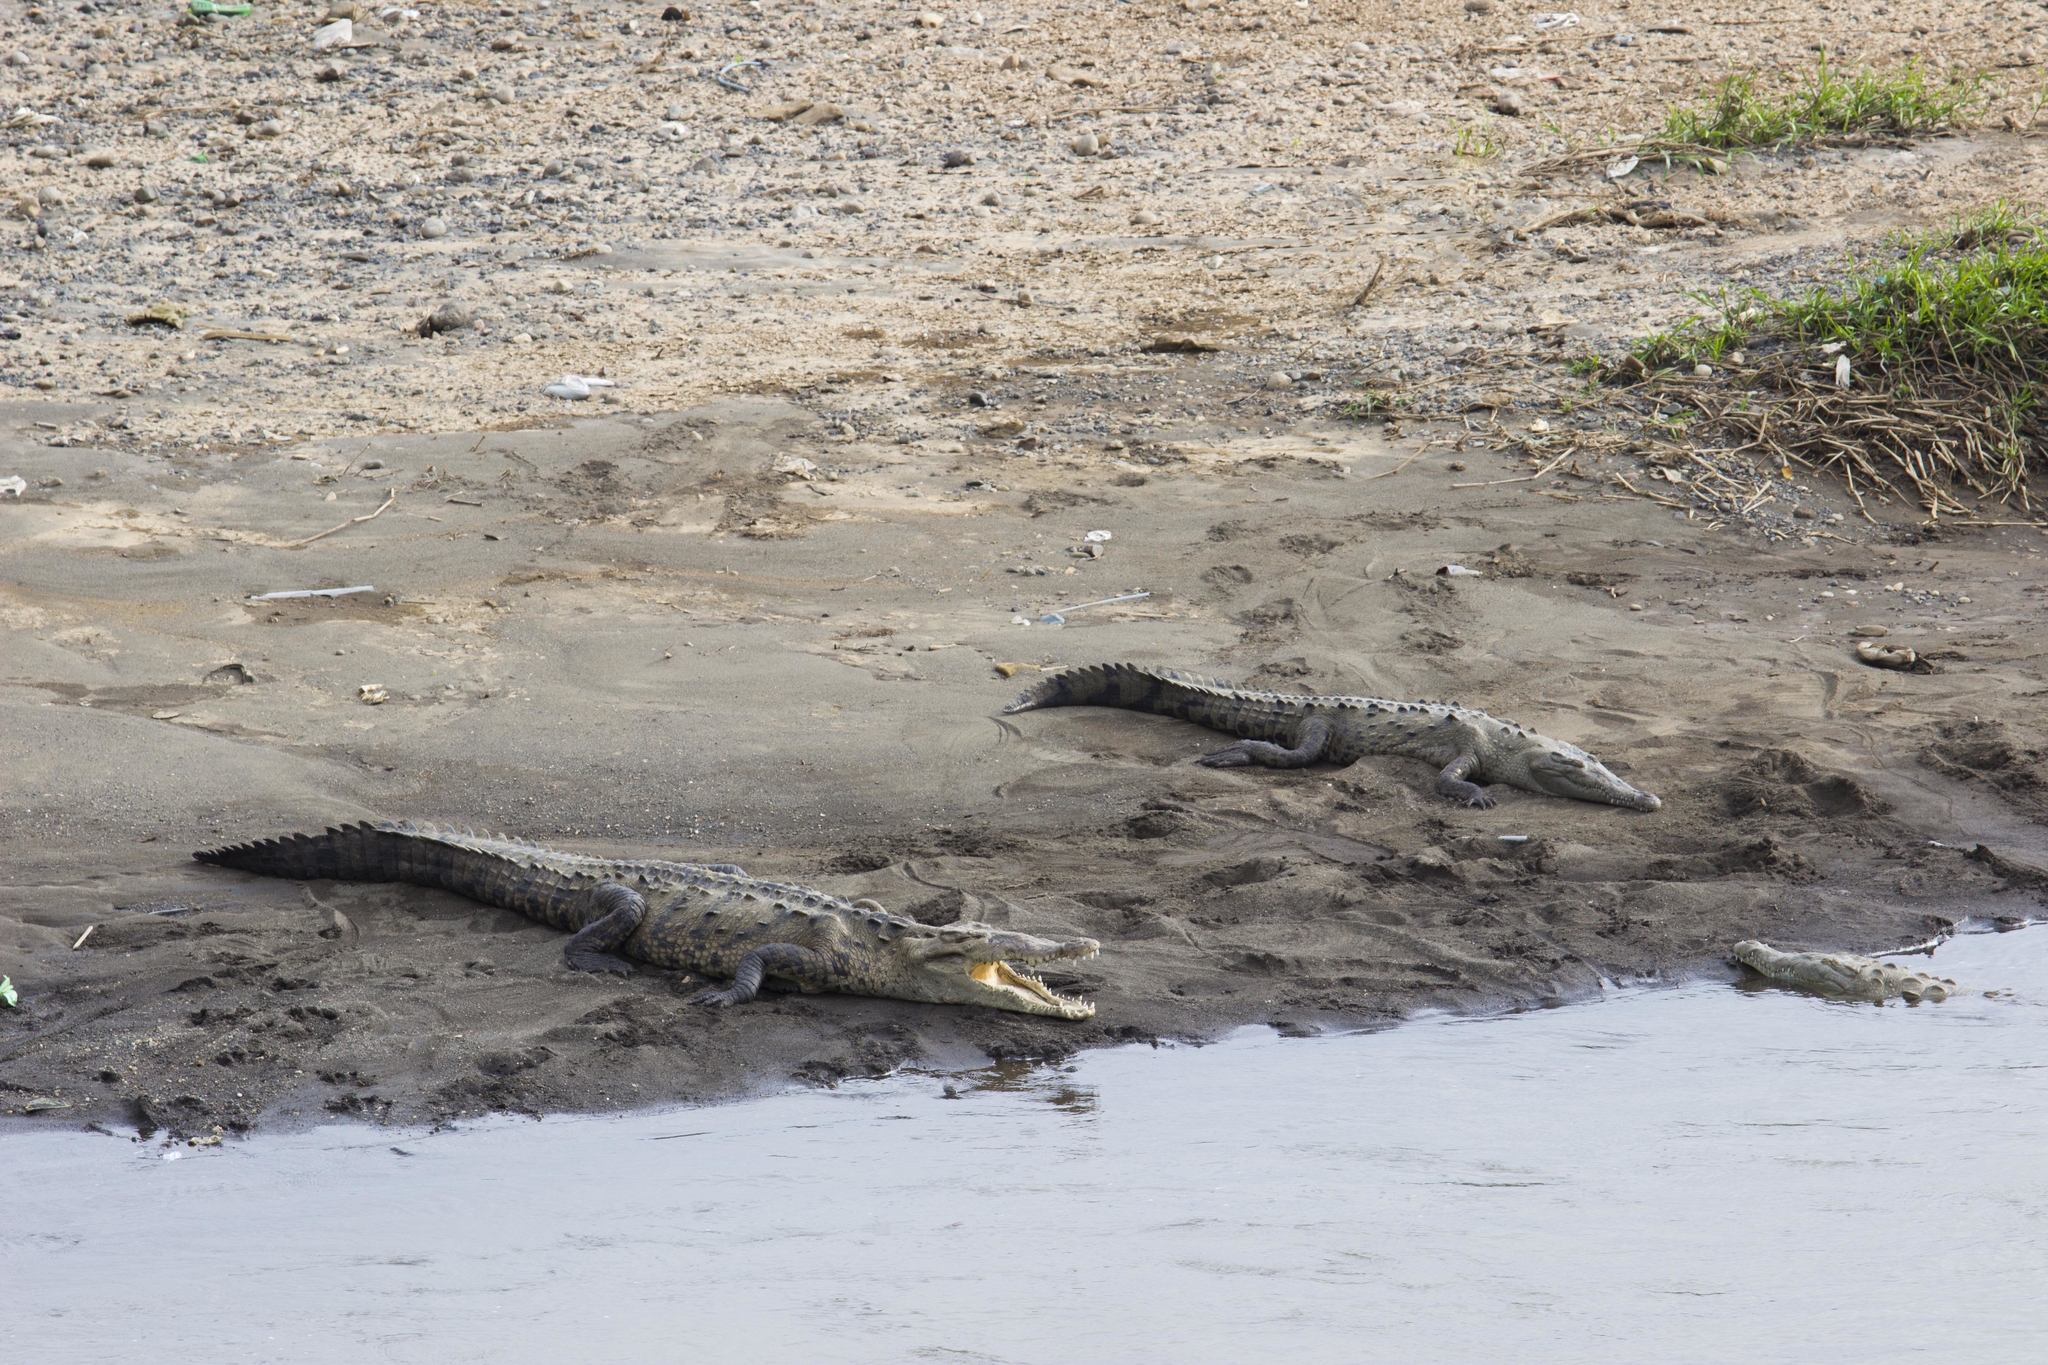 Crocodiles du Costa Rica prenant le soleil 